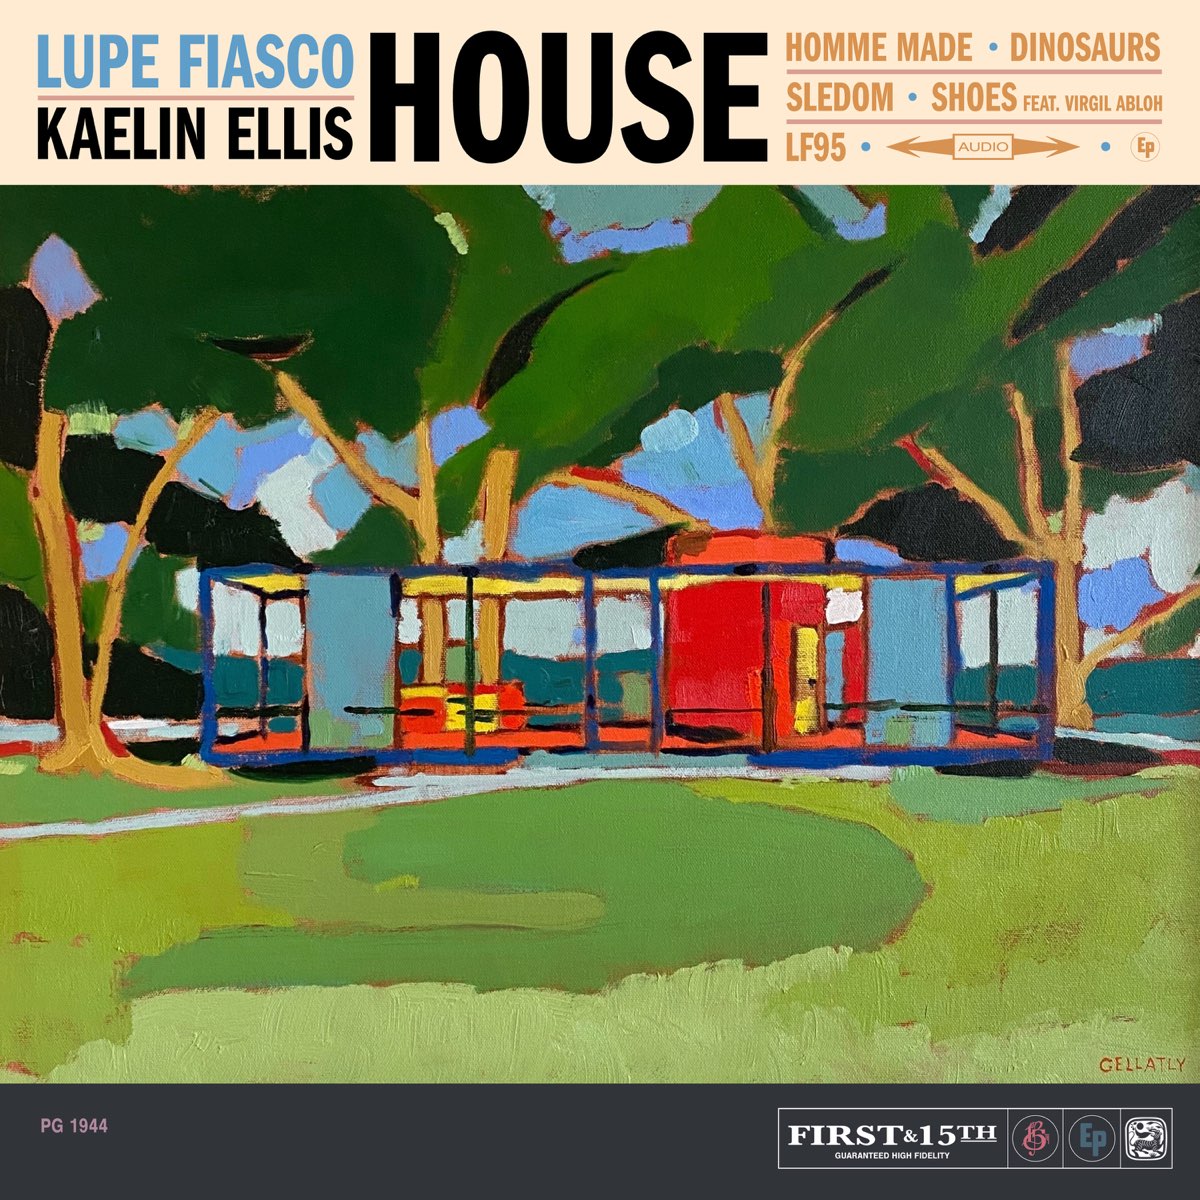 HOUSE (feat. Virgil Abloh) - EP - Album by Lupe Fiasco & Kaelin Ellis -  Apple Music